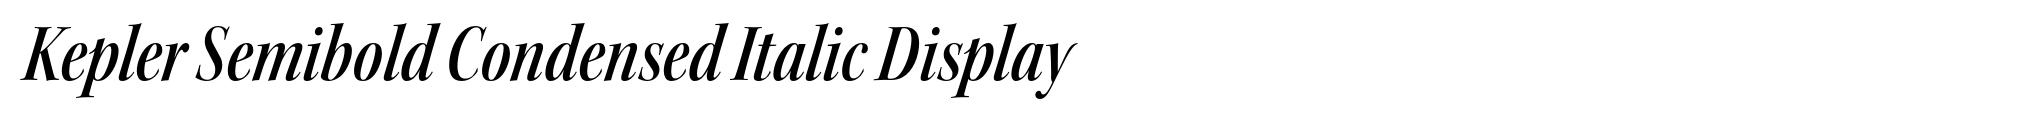 Kepler Semibold Condensed Italic Display image